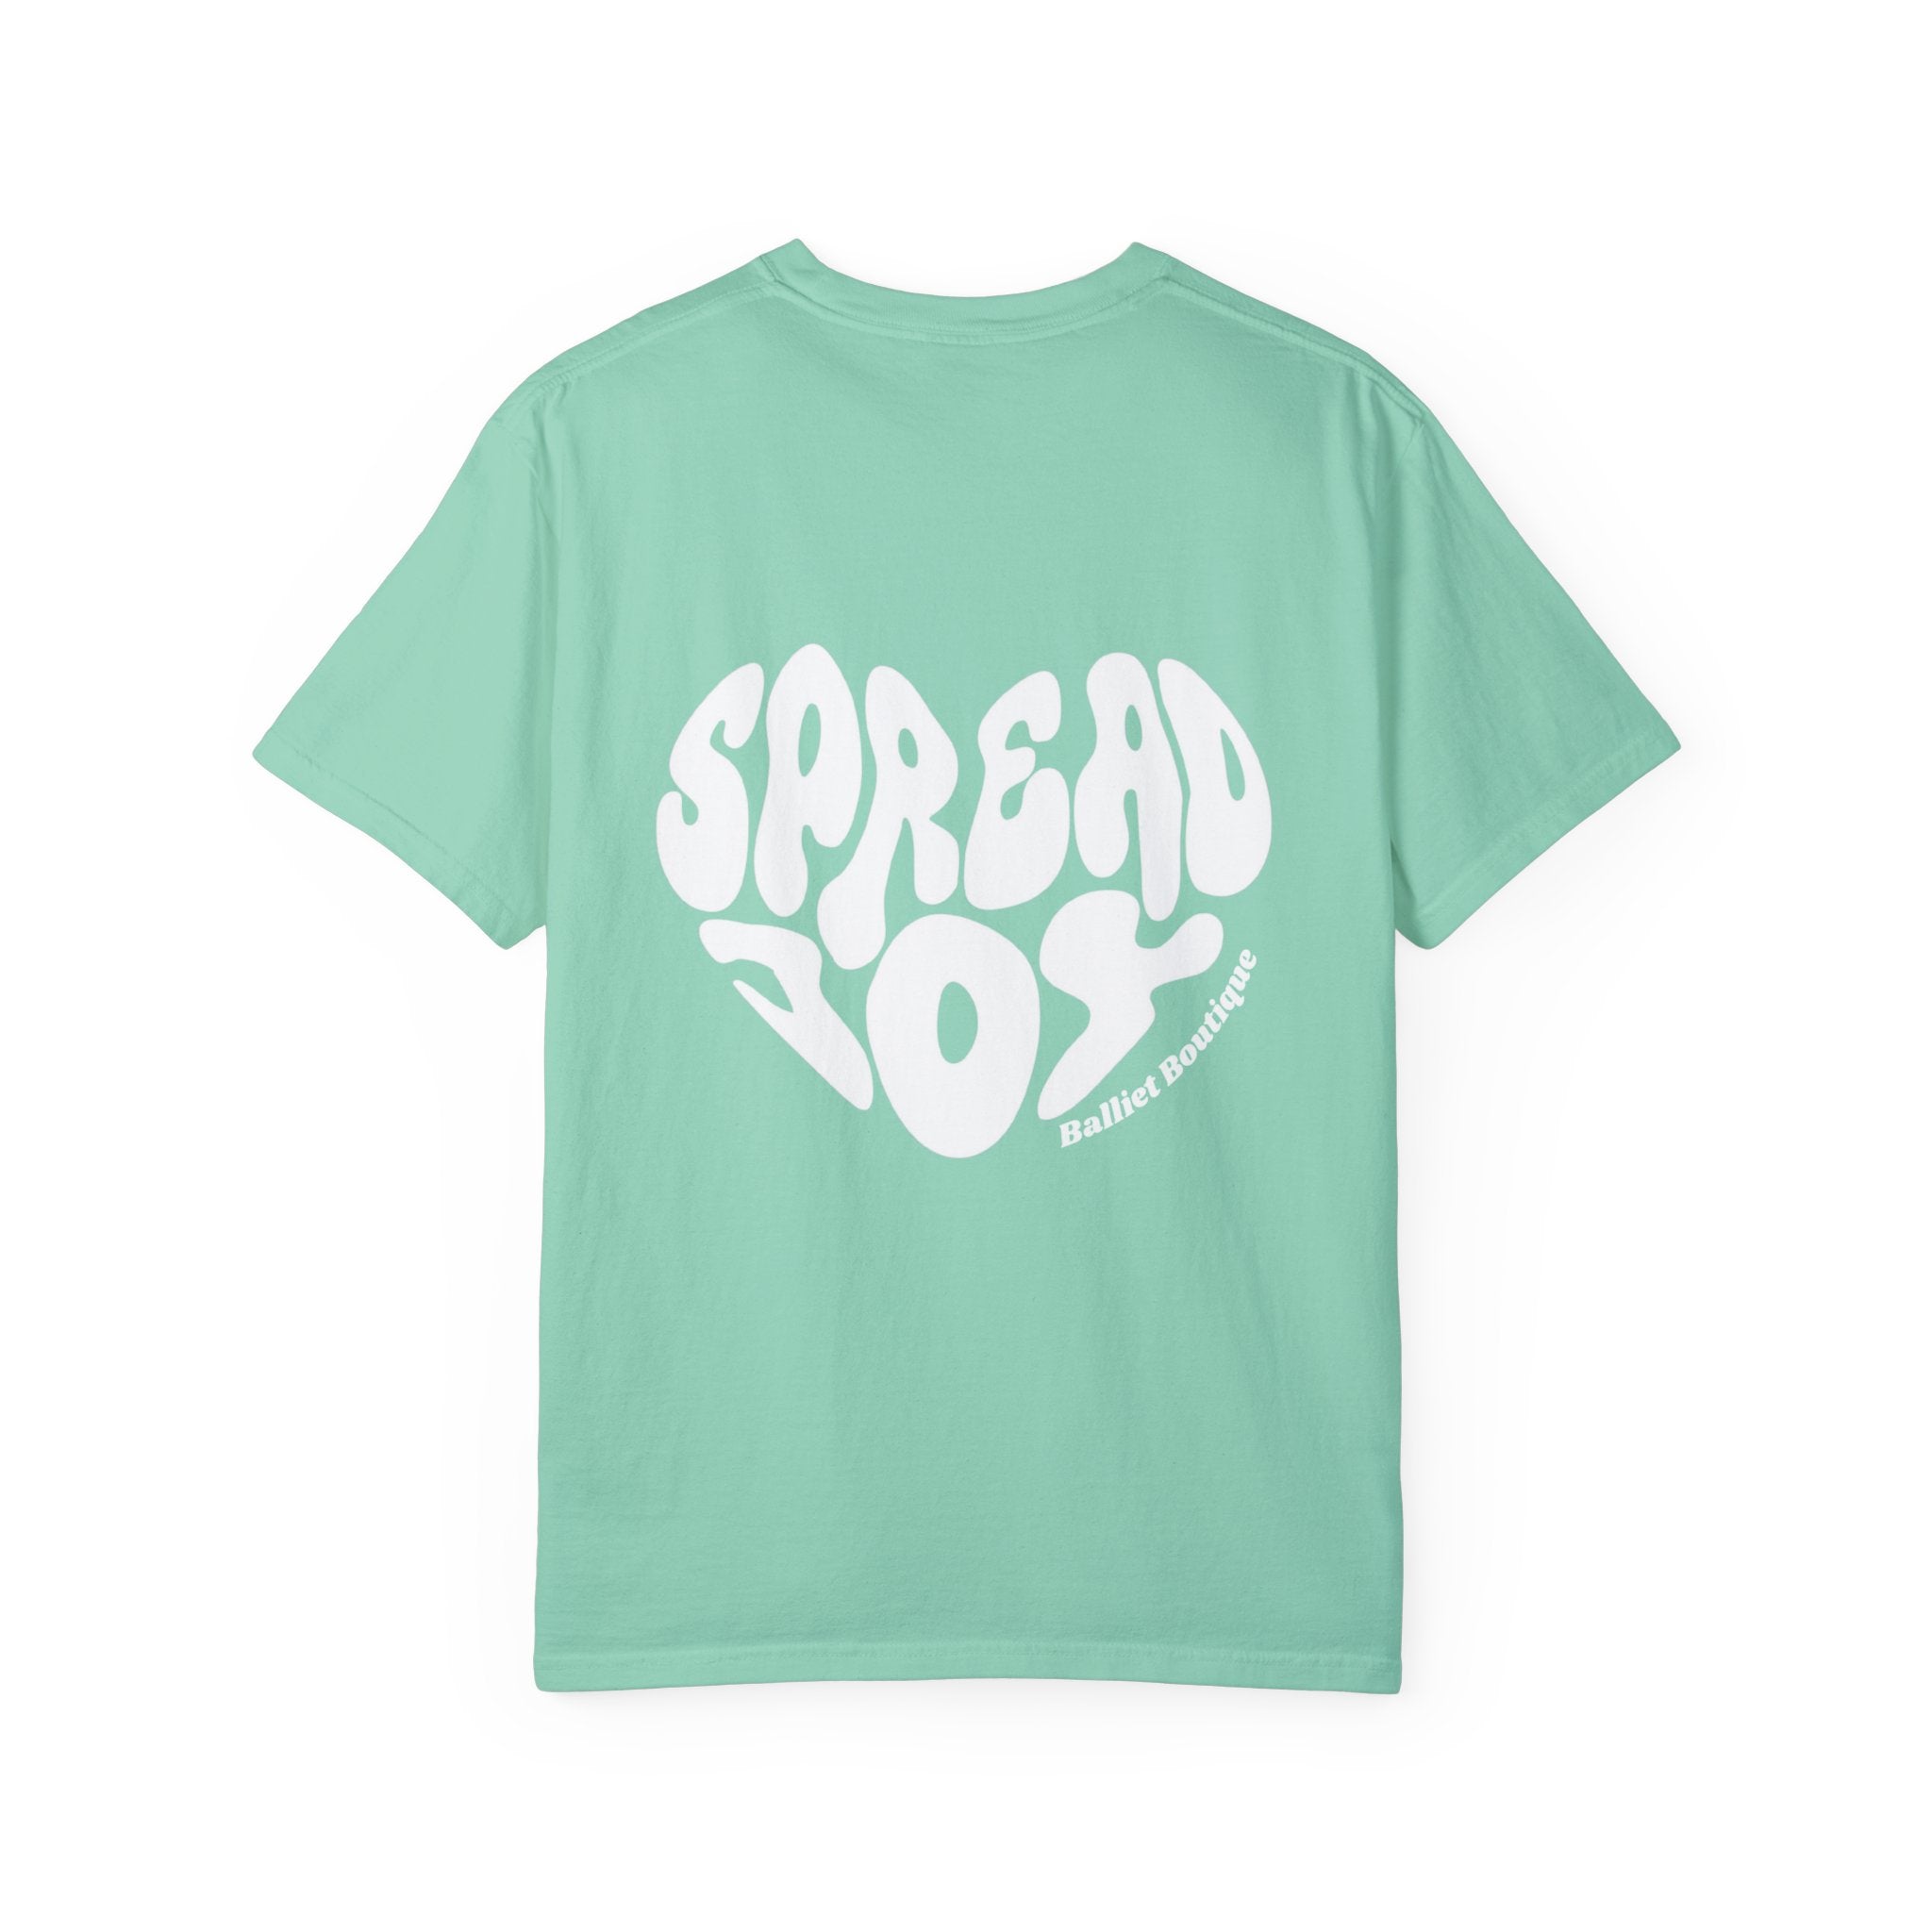 Spread Joy Shirt